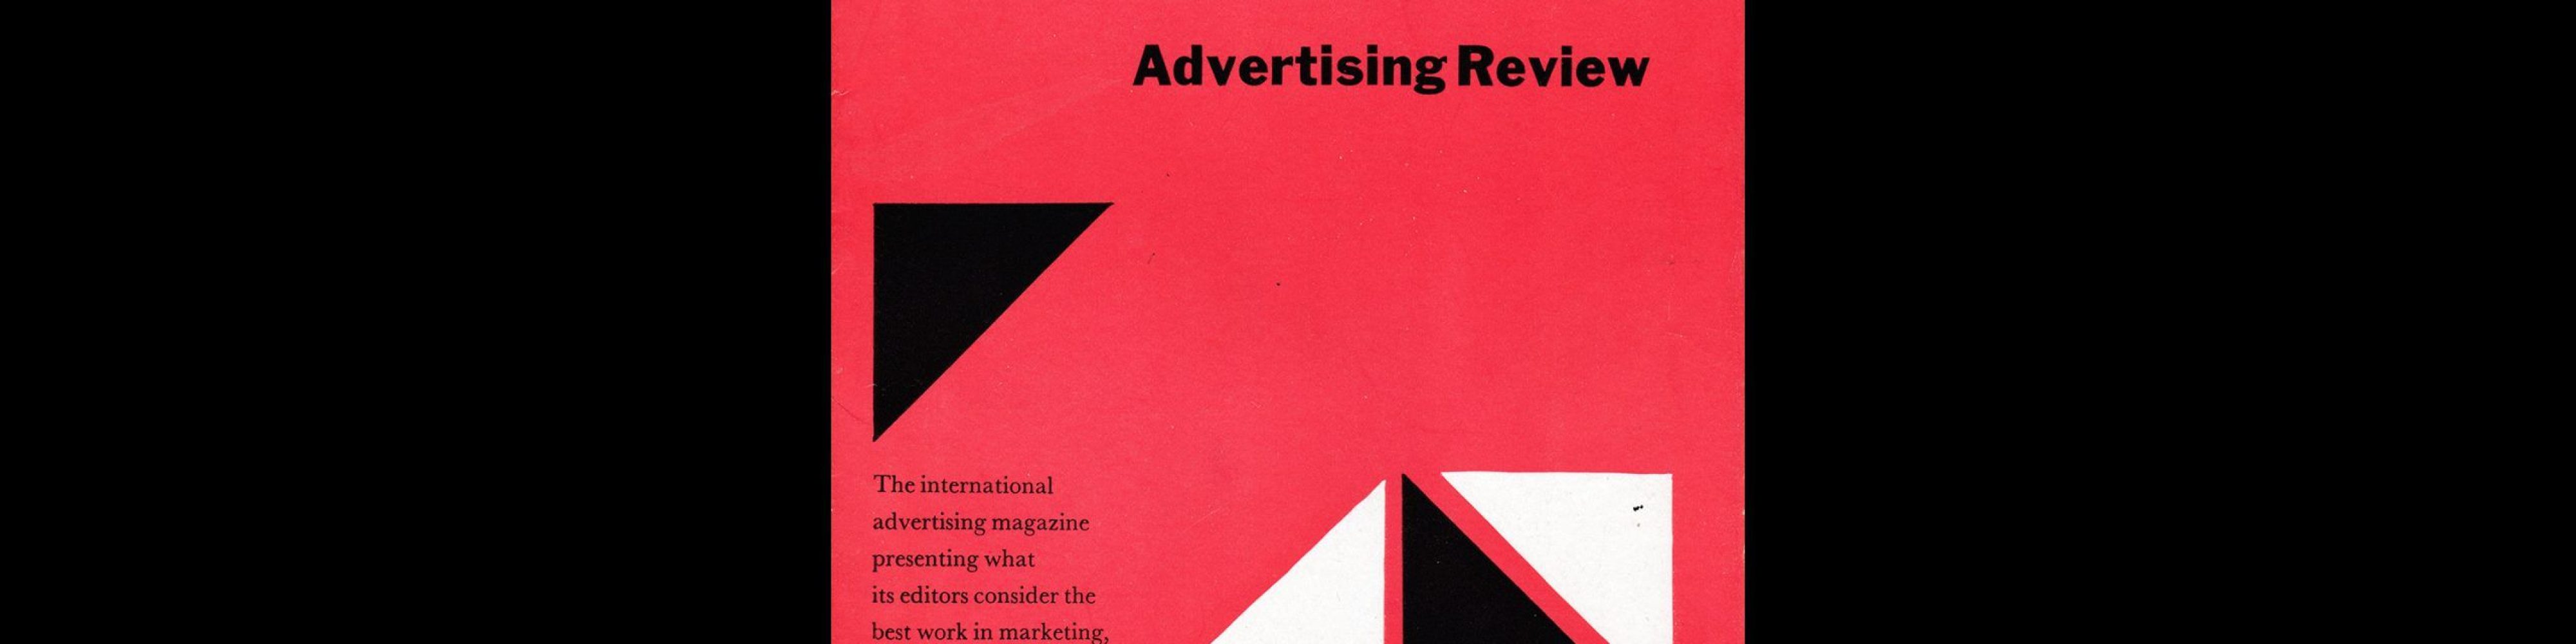 Advertising Review Brochure 1955 - 1